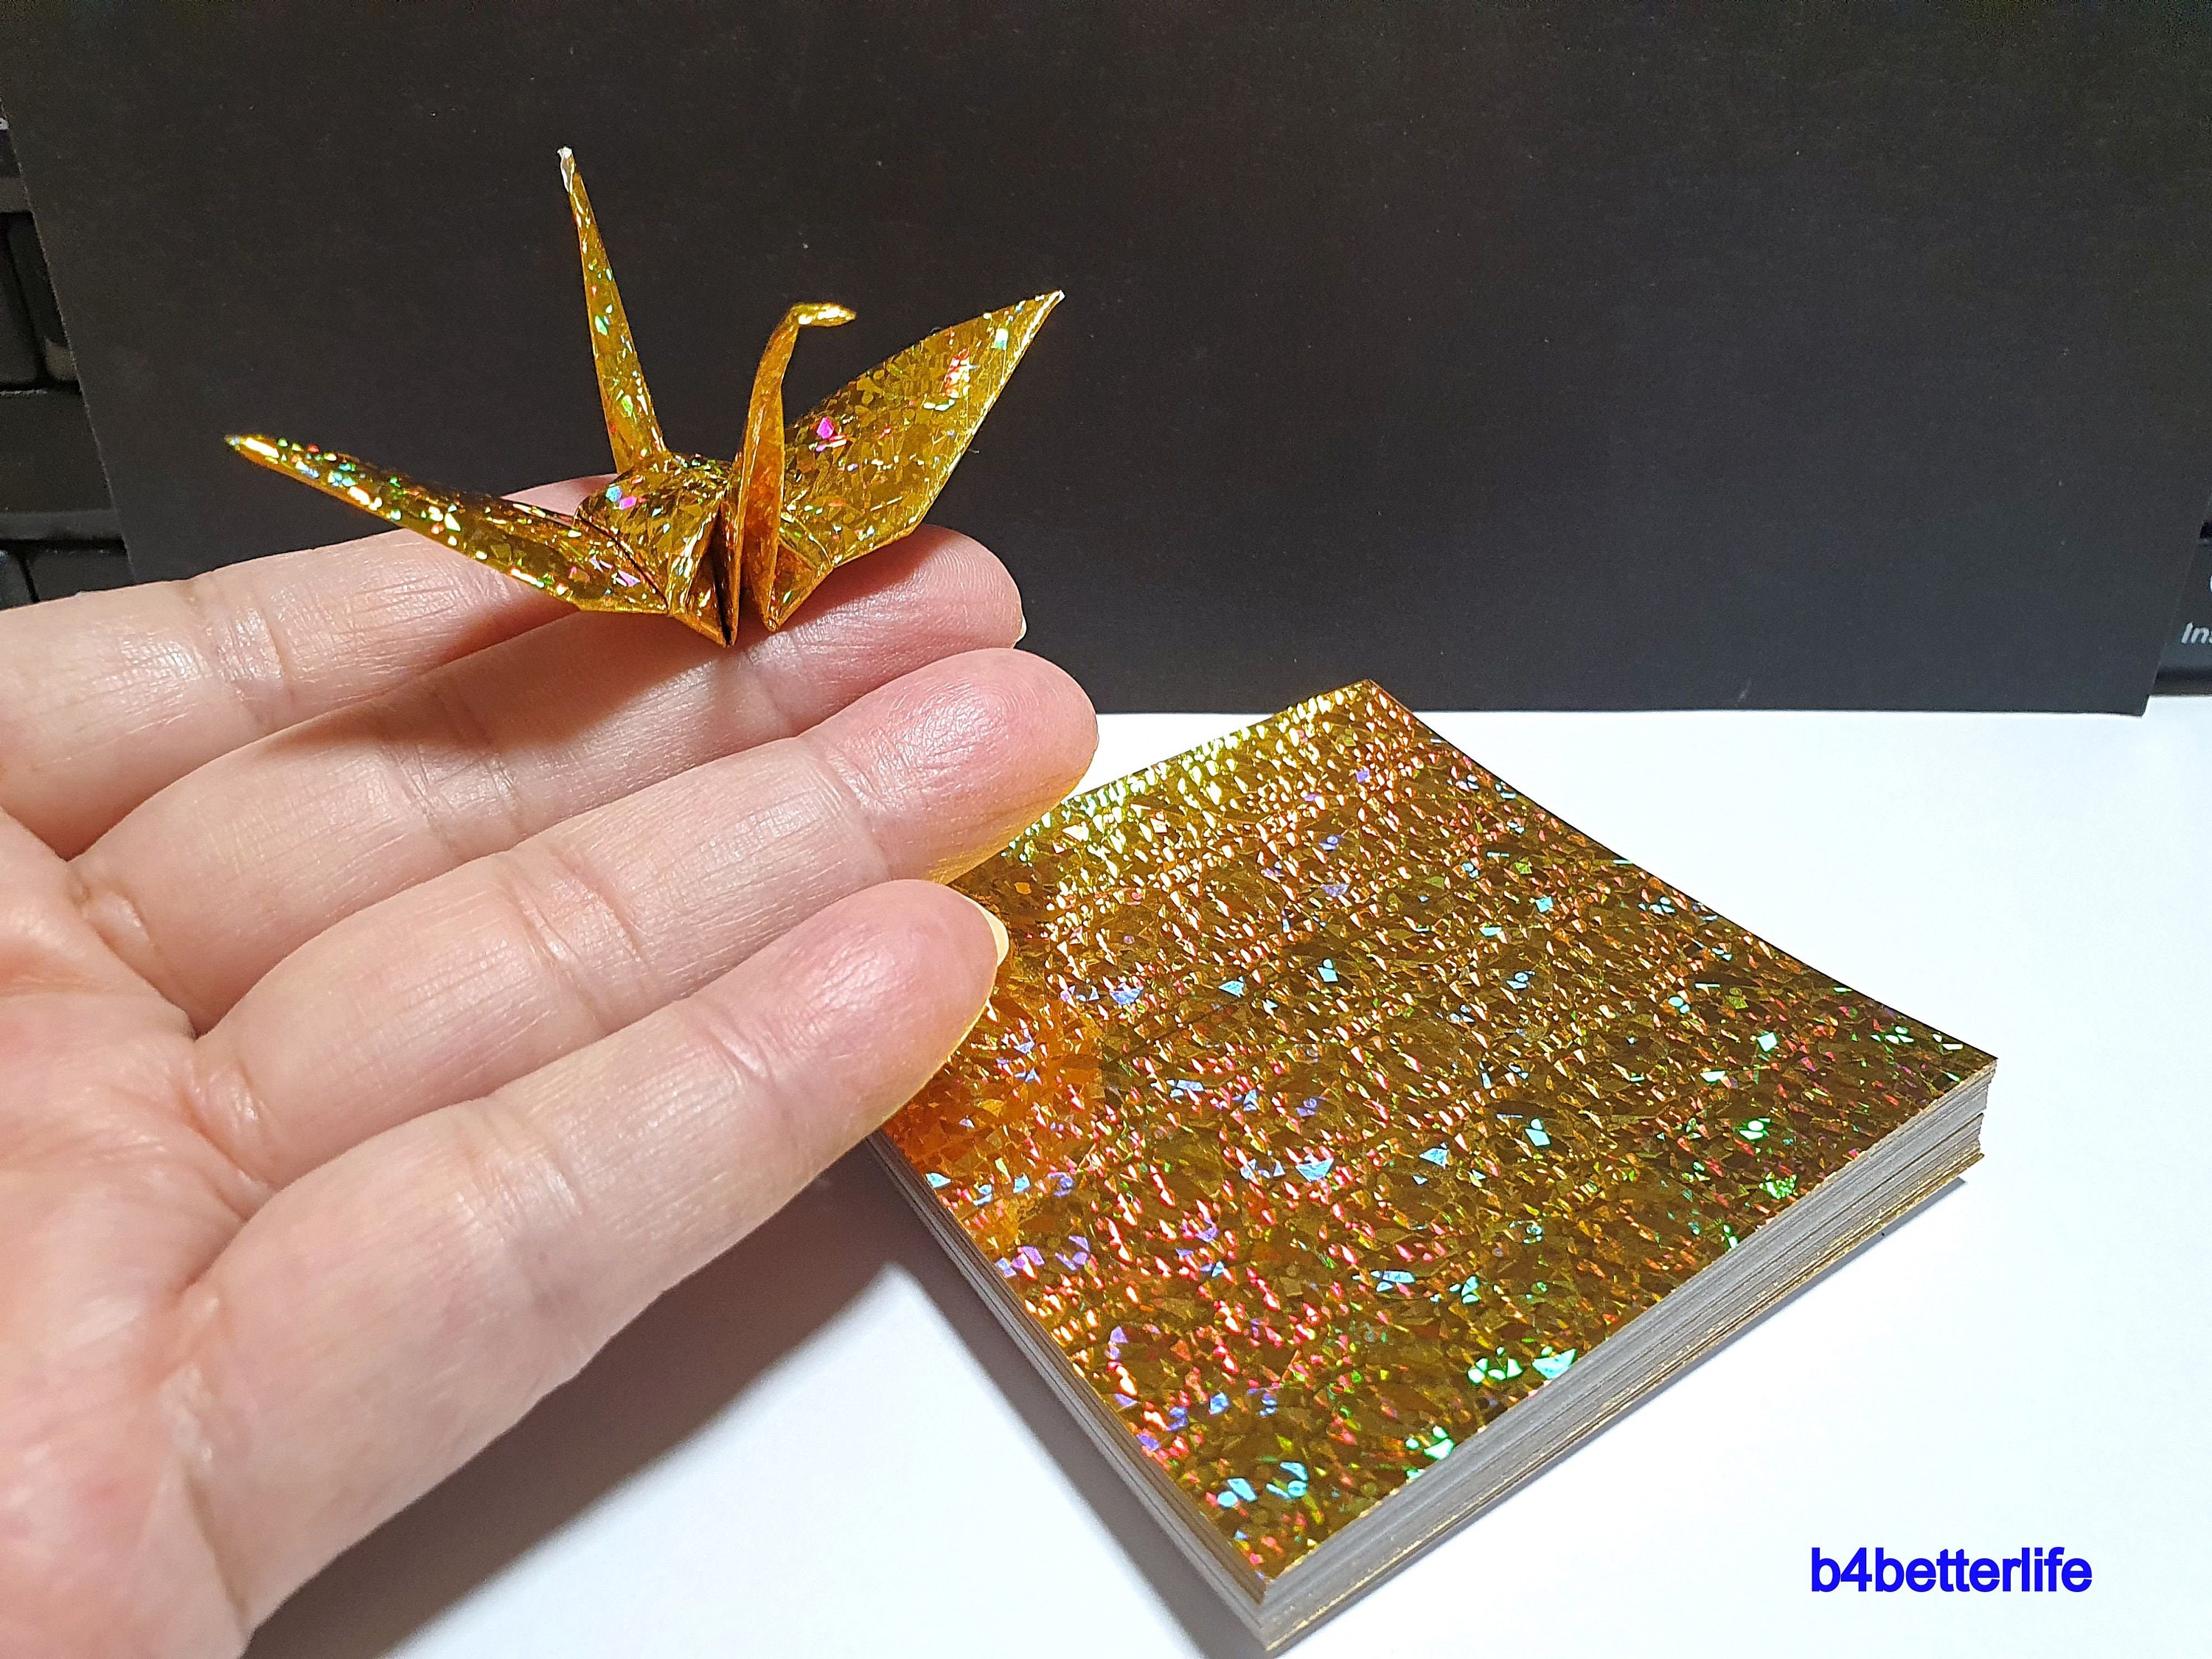 Metallic Paper, Metal Momi, Art Paper for Origami, Scrapbooking, Fine Arts  